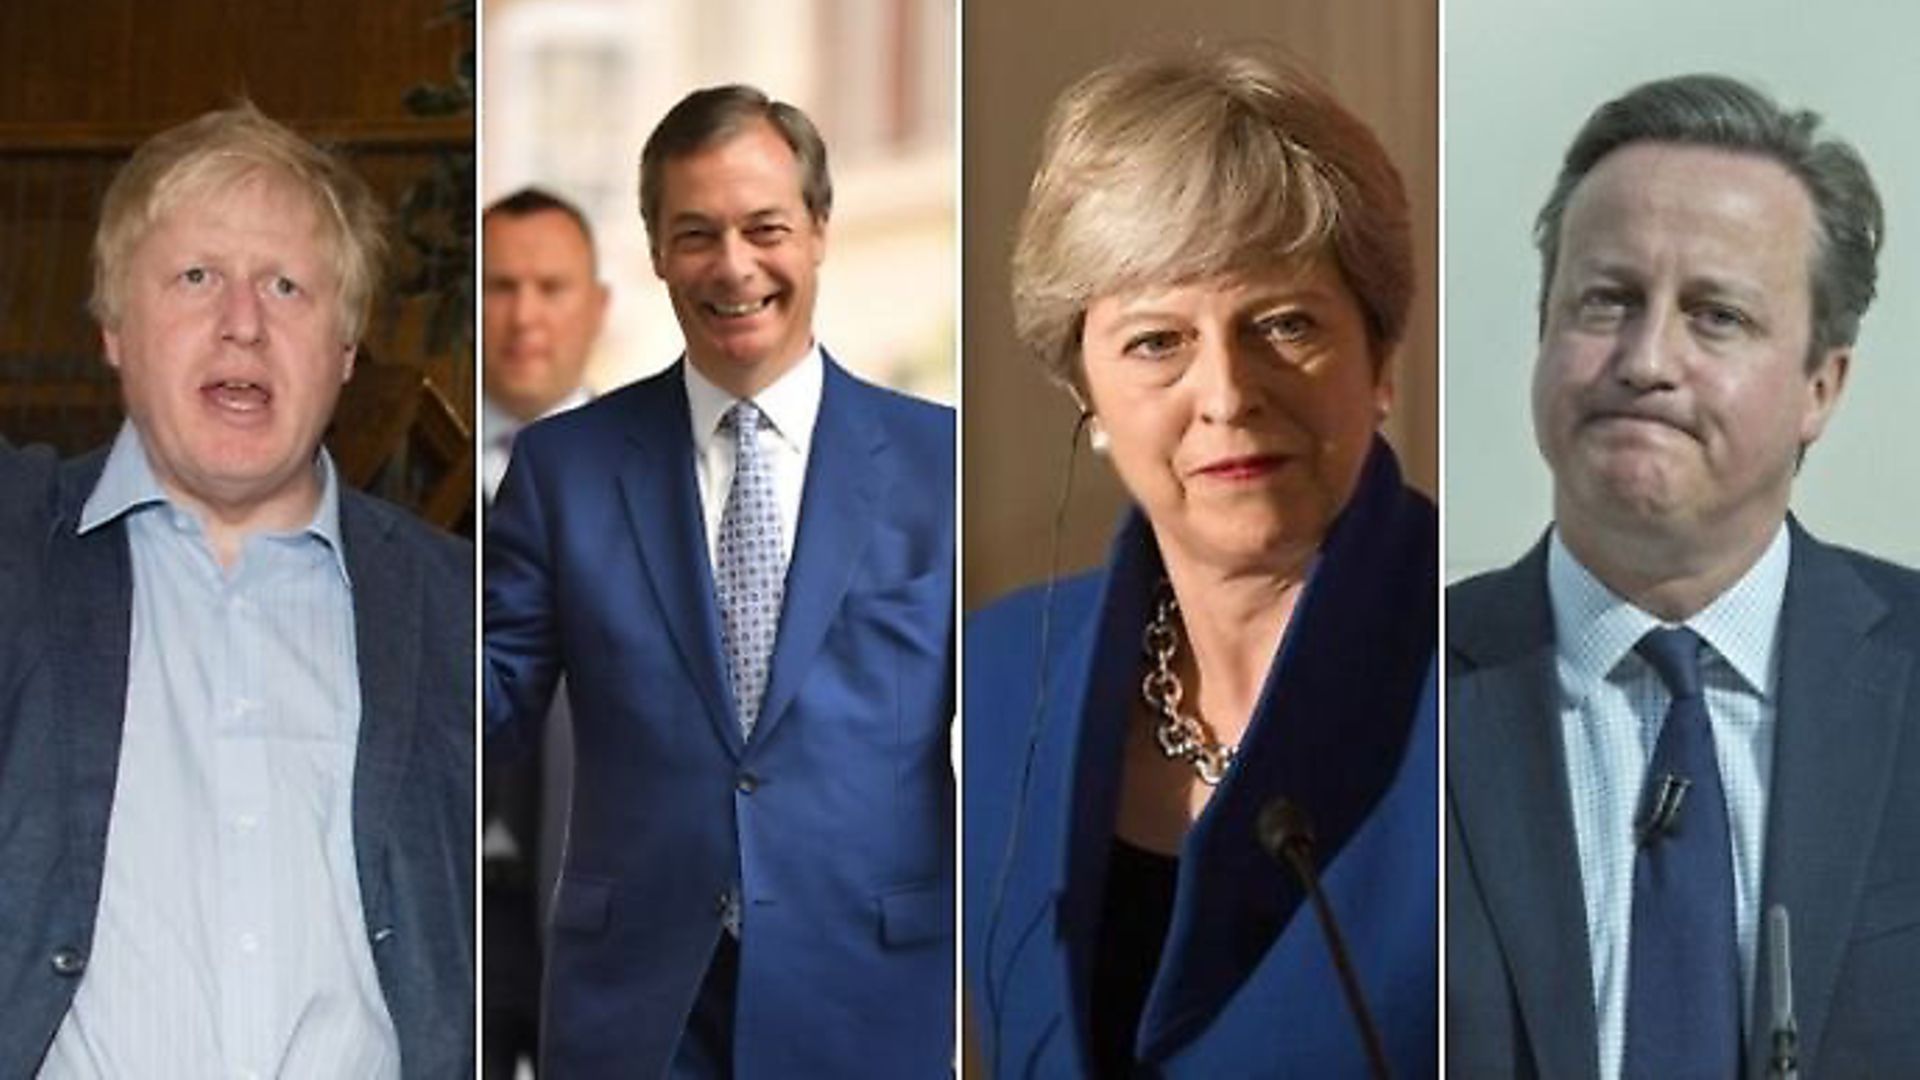 Boris Johnson, Nigel Farage, Theresa May and David Cameron. Photograph: The New European. - Credit: Archant